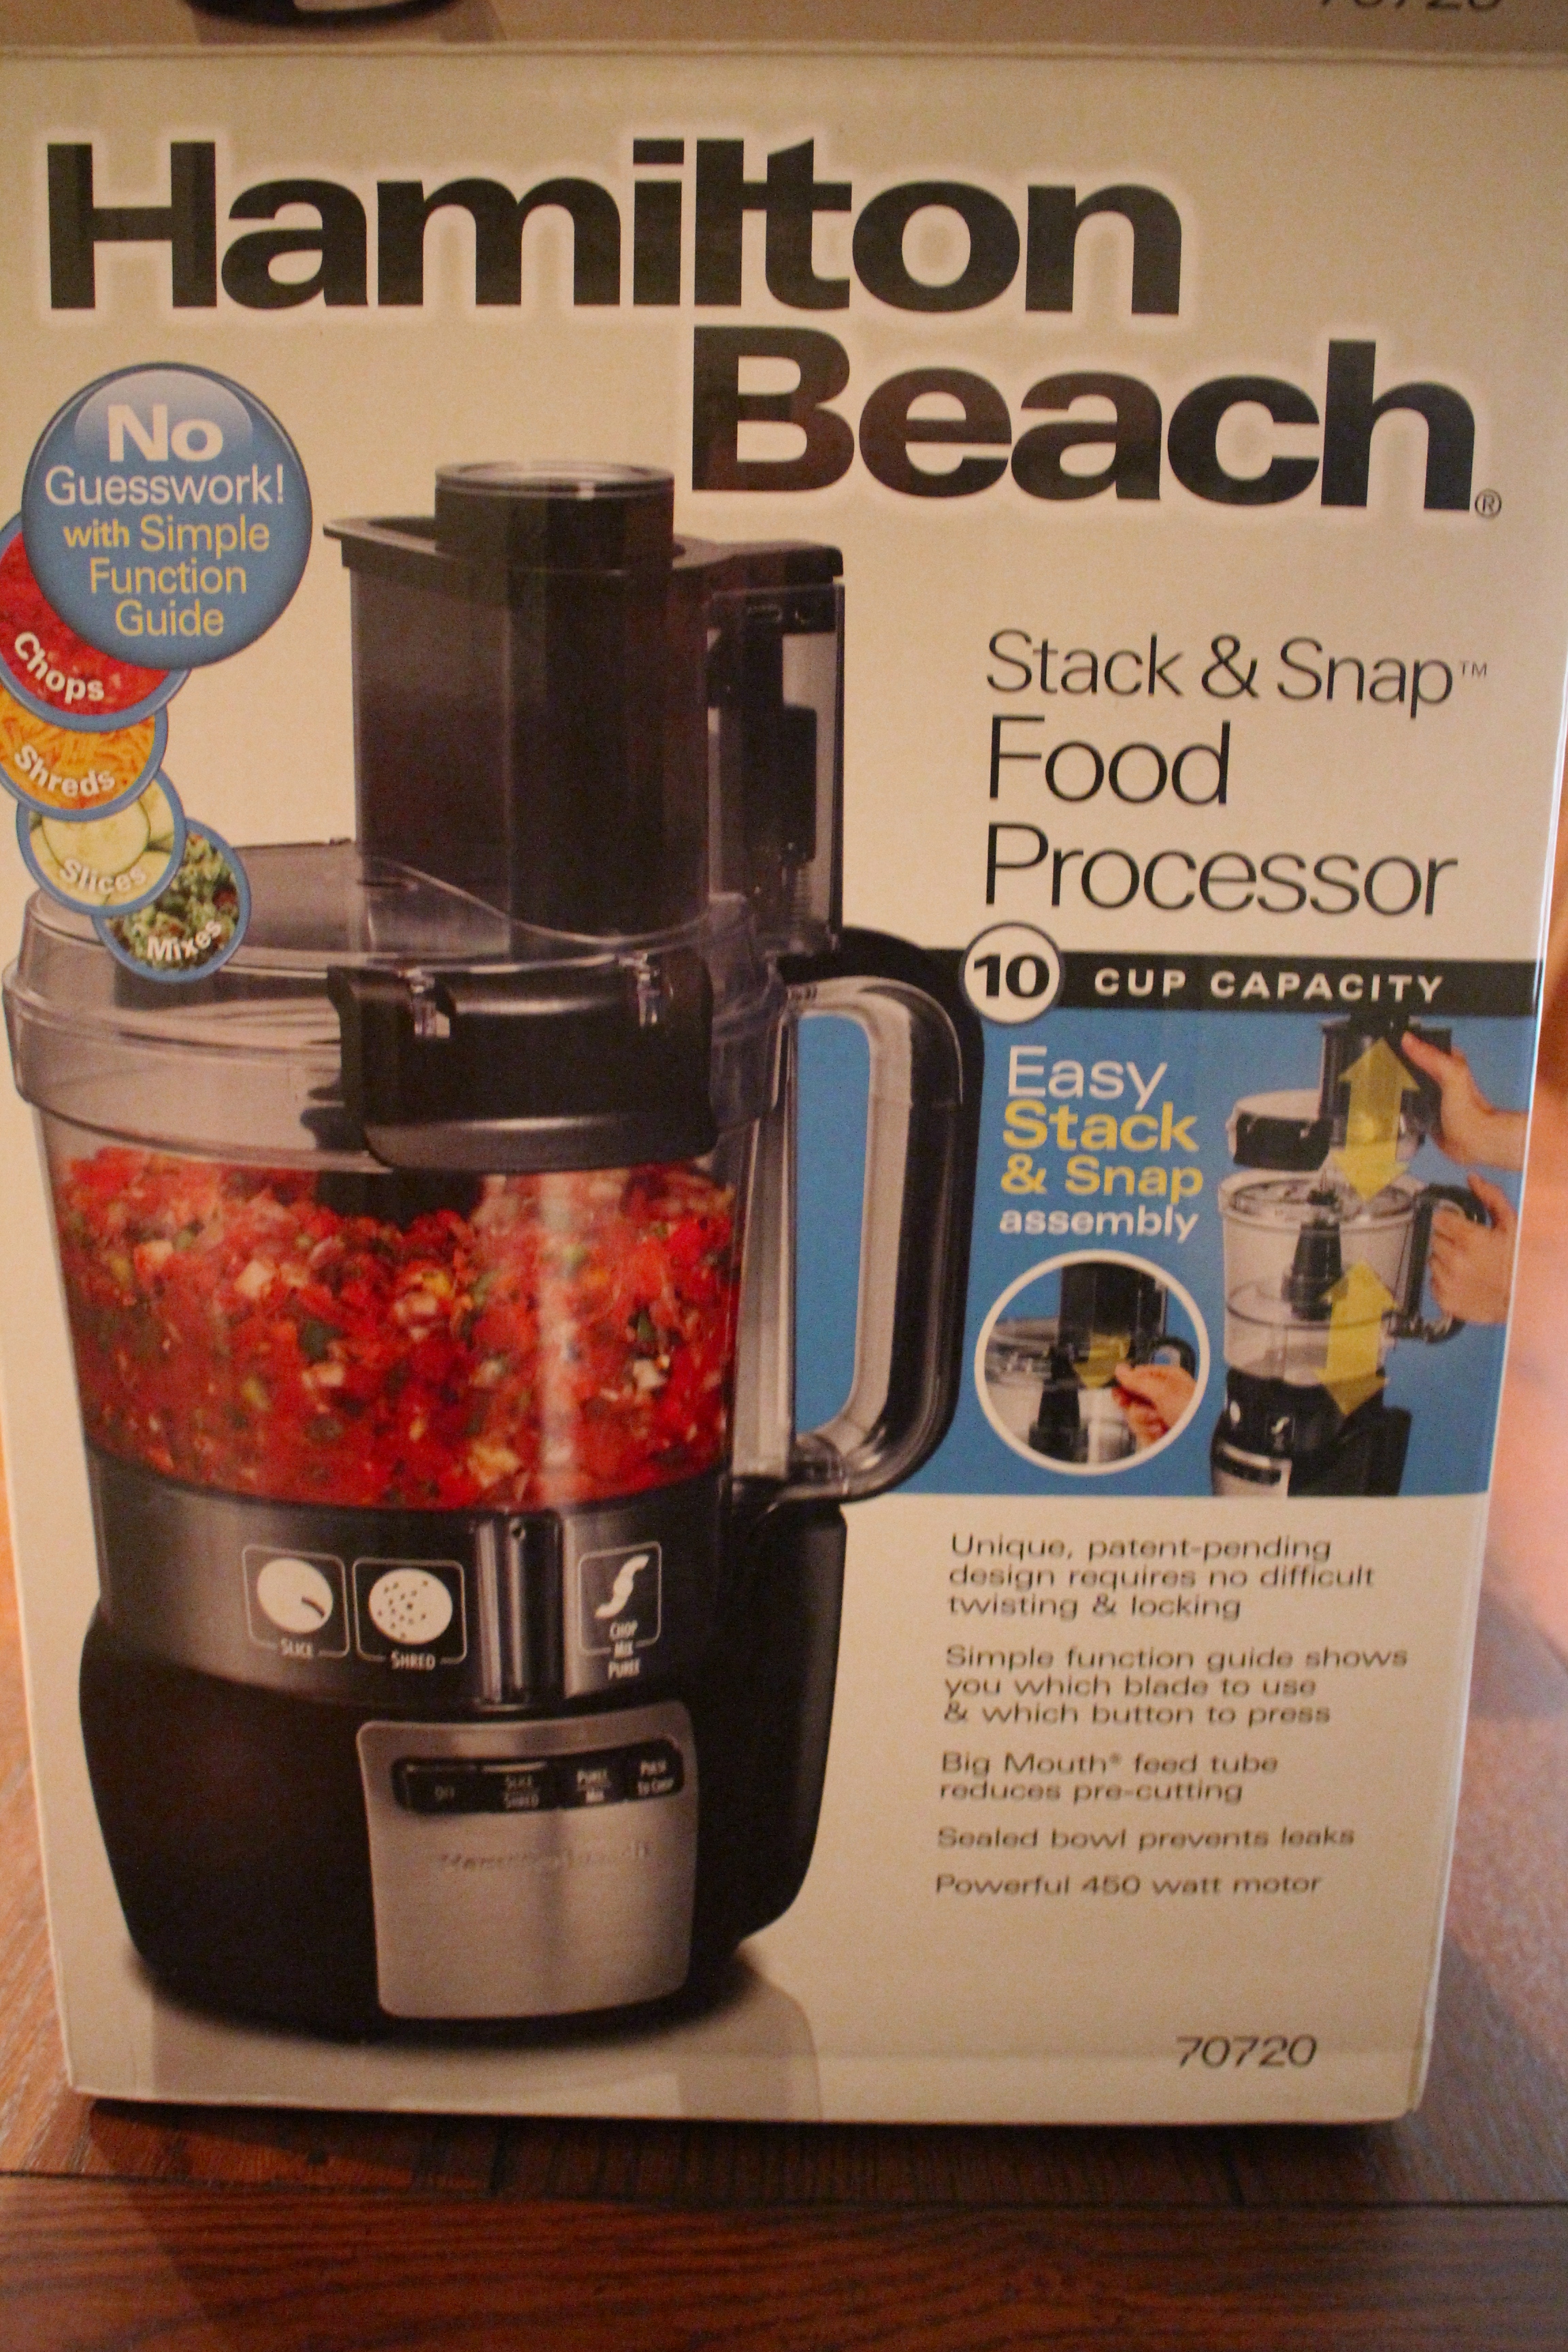 Hamilton Beach Stack & Snap 10-Cup Food Processor: Santa's Little